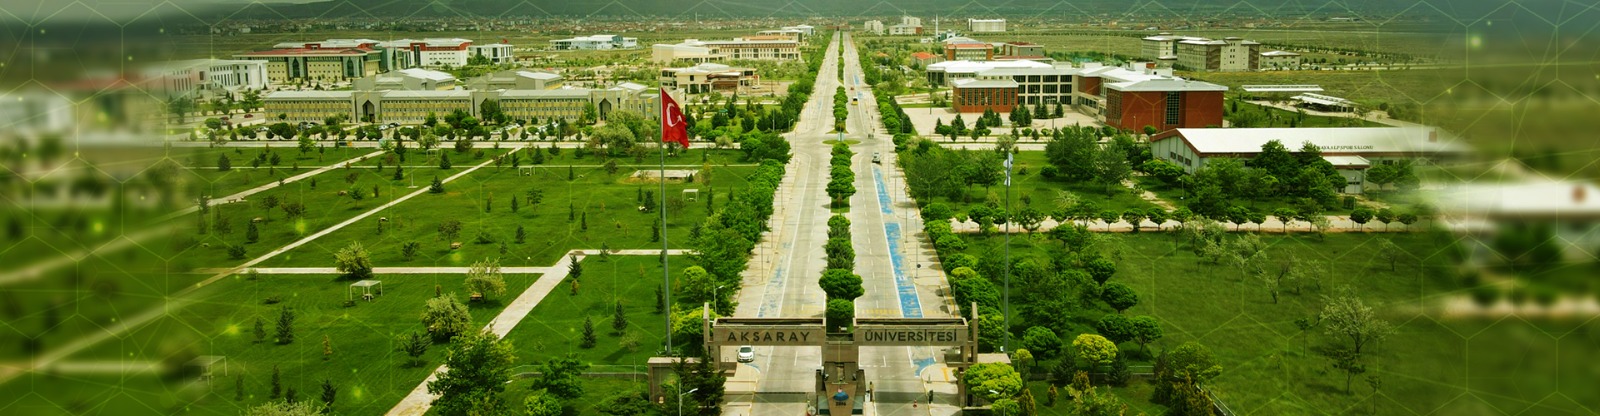 aksaray universitesi find and study 4 - Aksaray University